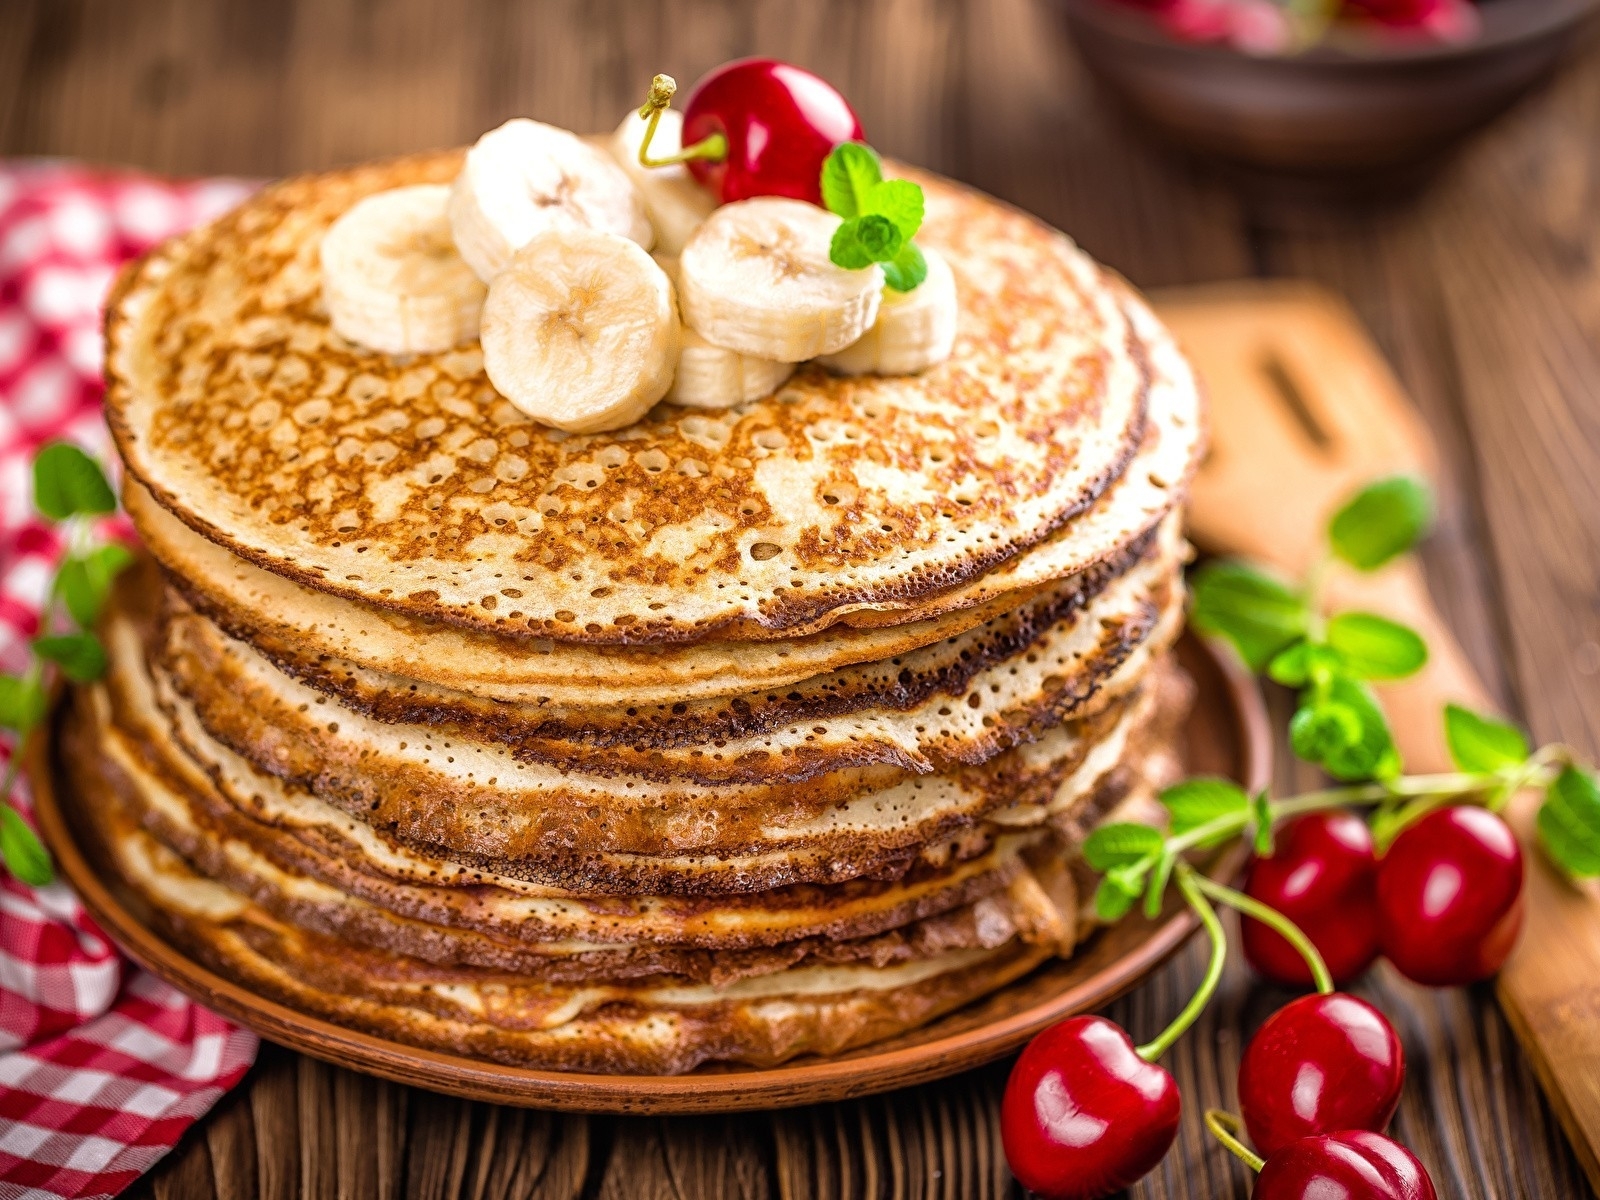 Image: Pancakes, bananas, berries, cherries